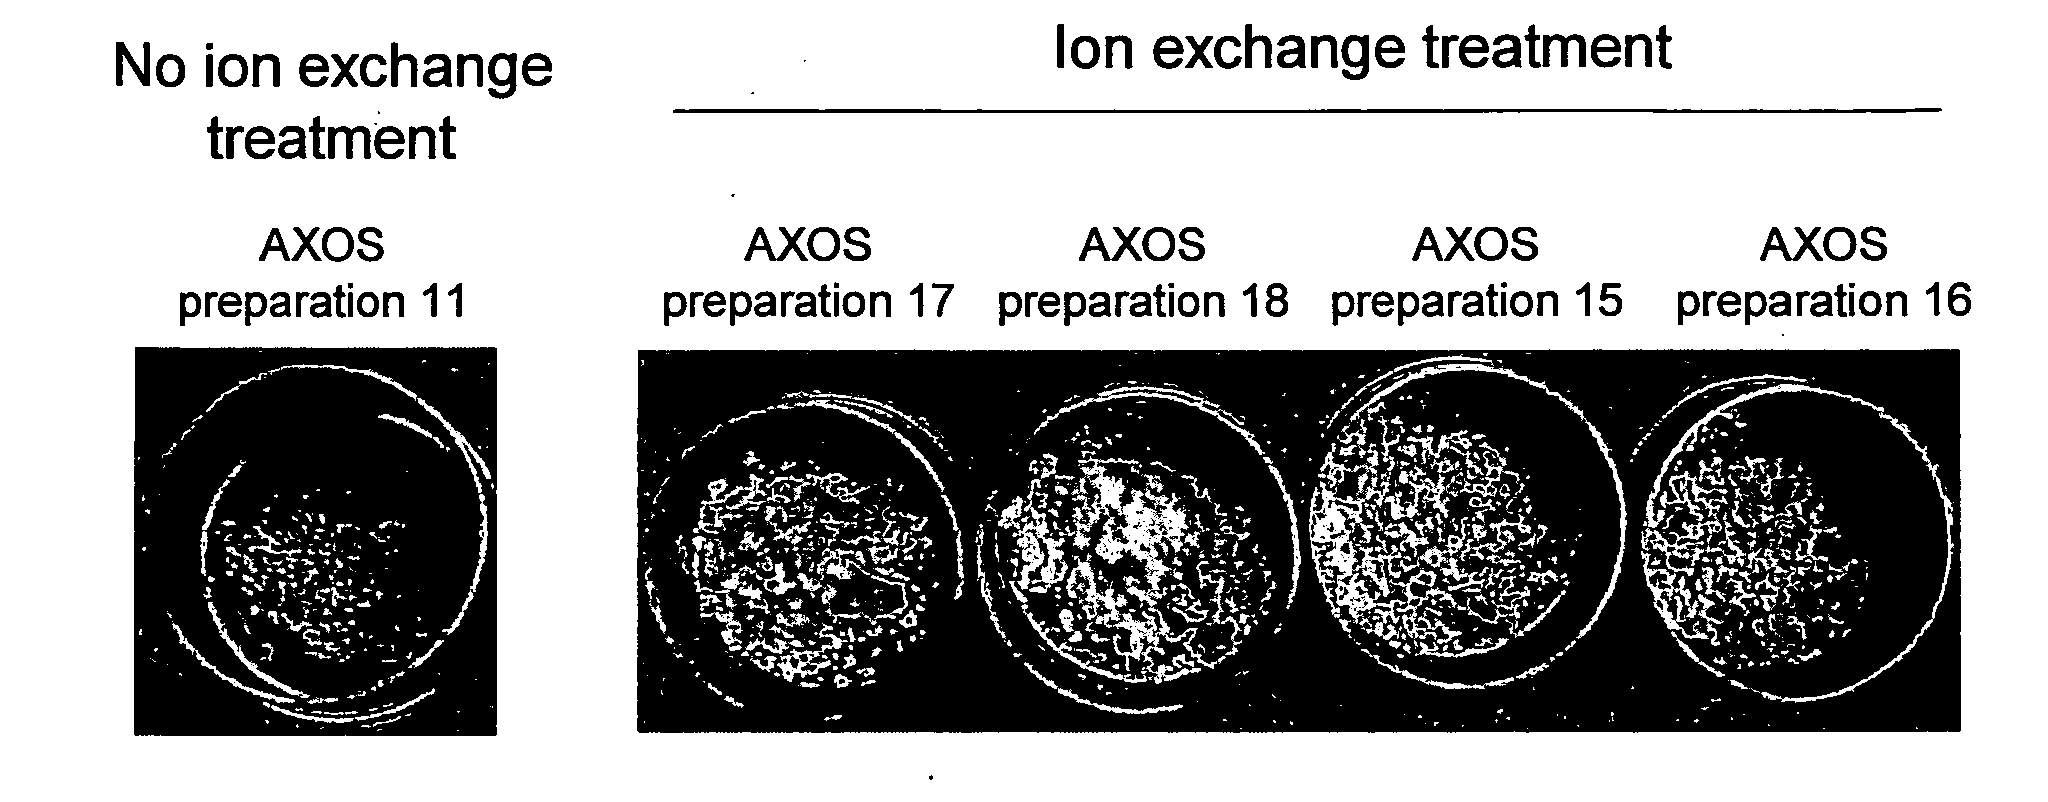 (arabino)xylan oligosaccharide preparation